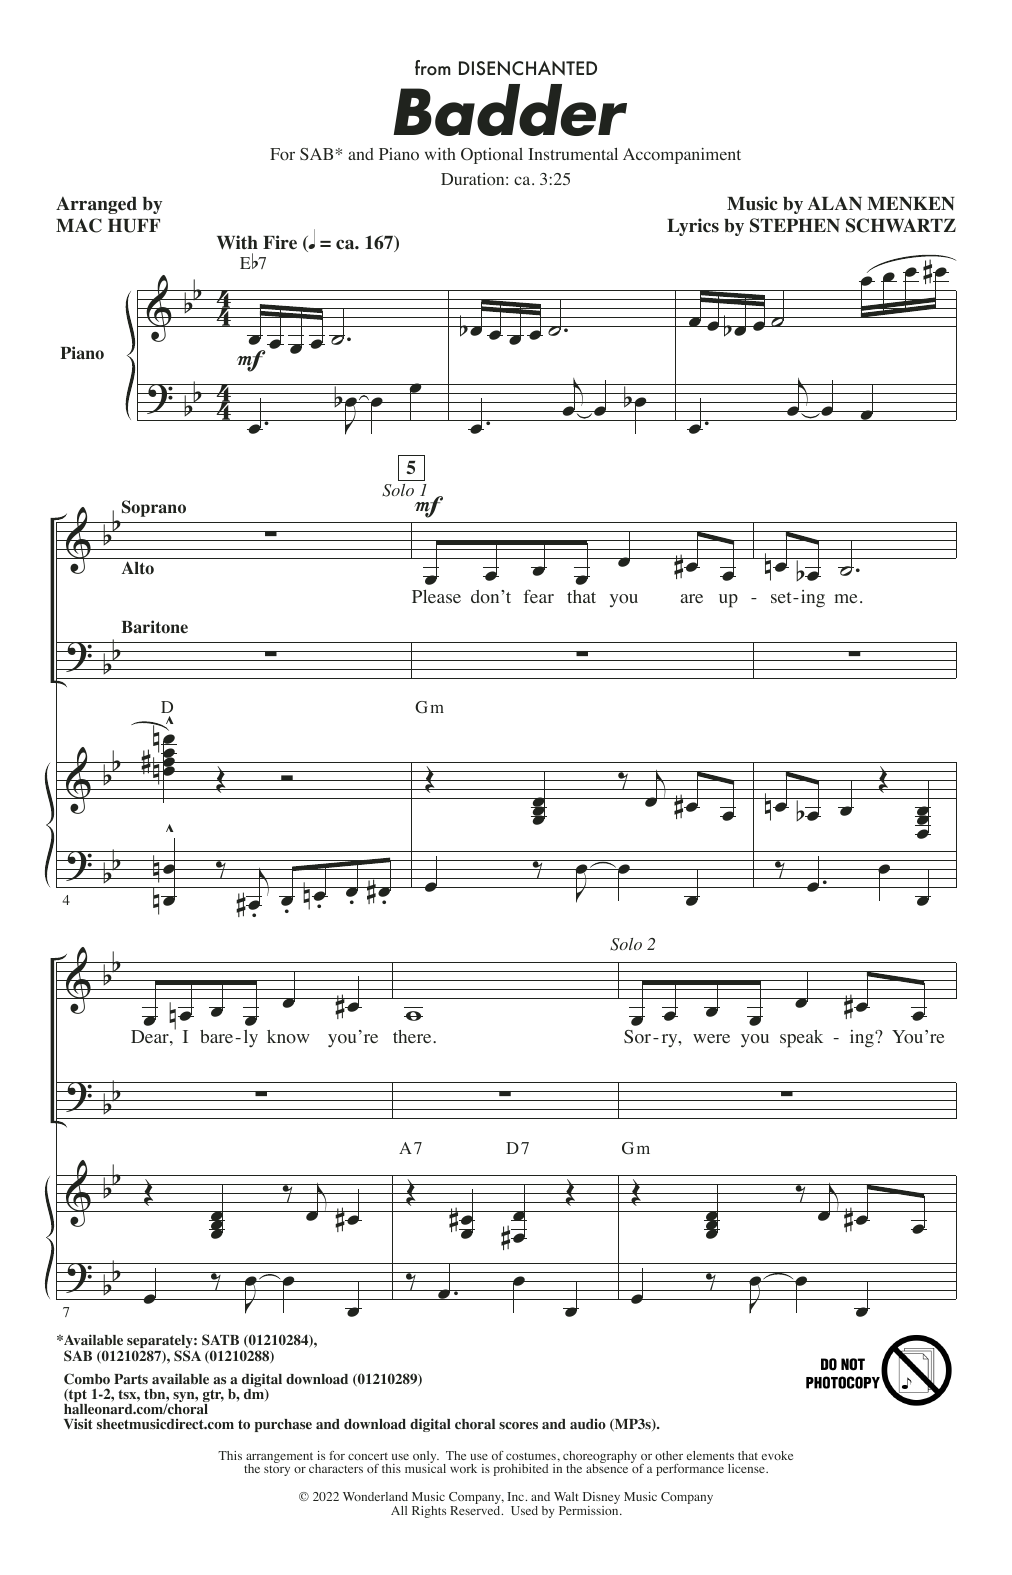 Amy Adams and Maya Rudolph Badder (from Disenchanted) (arr. Mac Huff) Sheet Music Notes & Chords for SAB Choir - Download or Print PDF